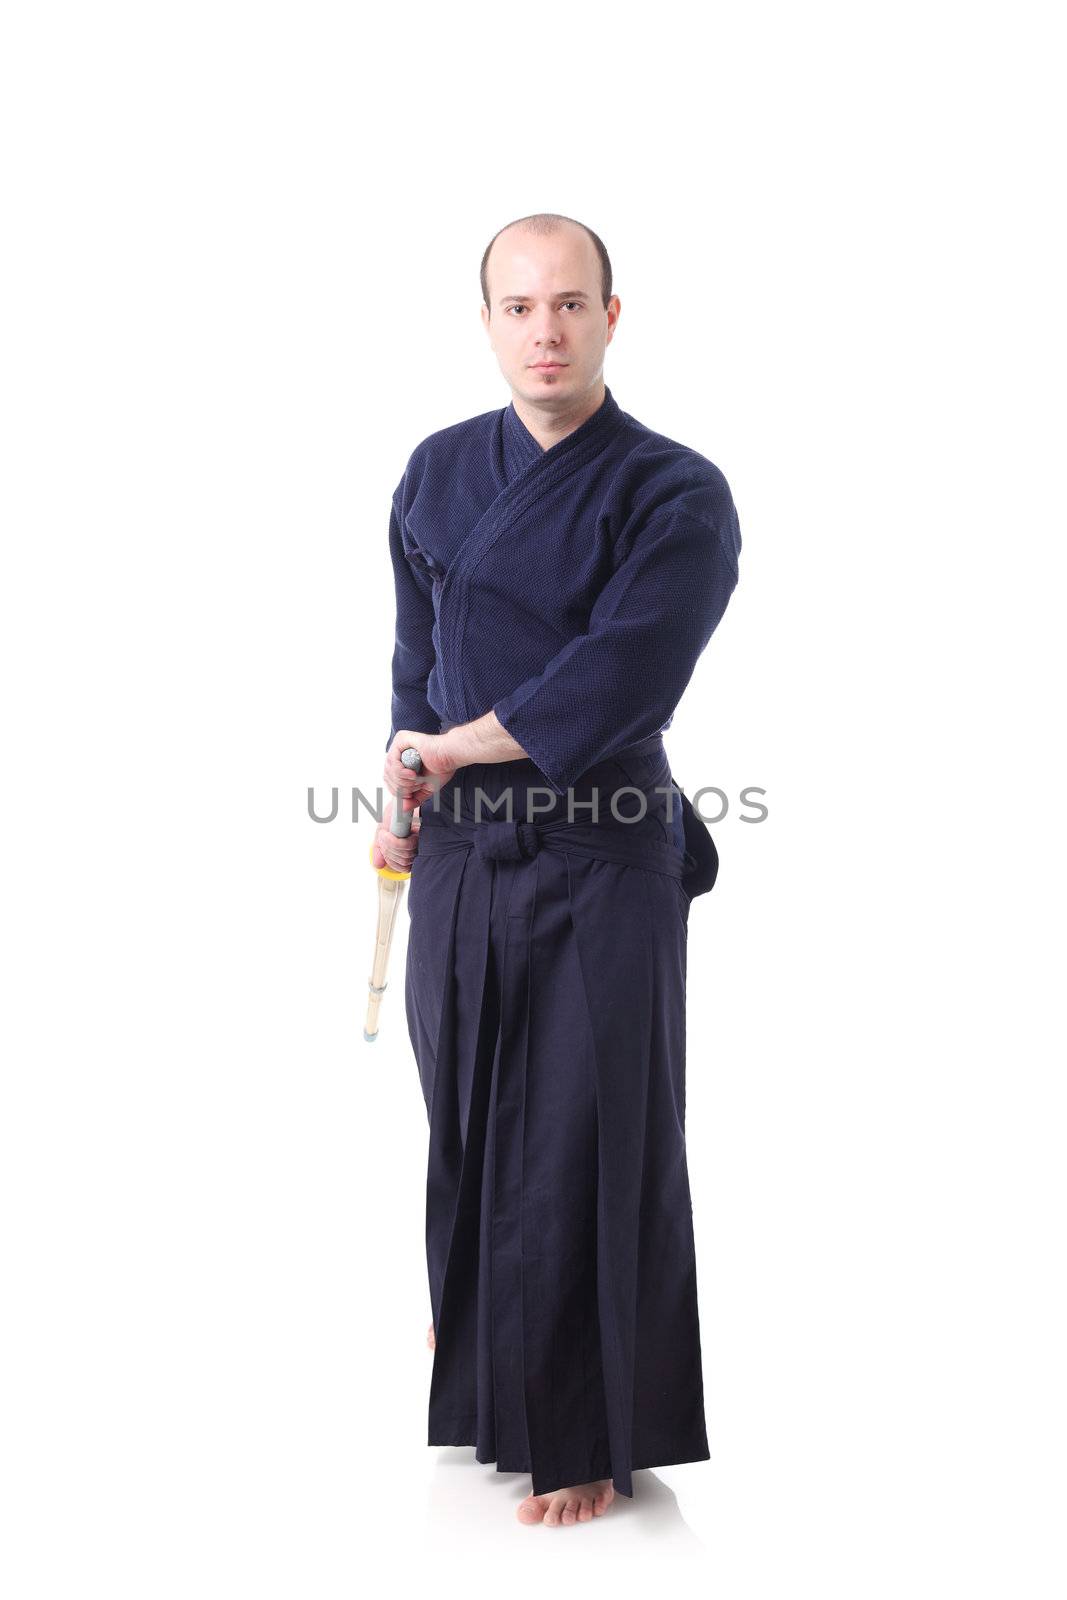 Kendo fighter with Shinai by kokimk